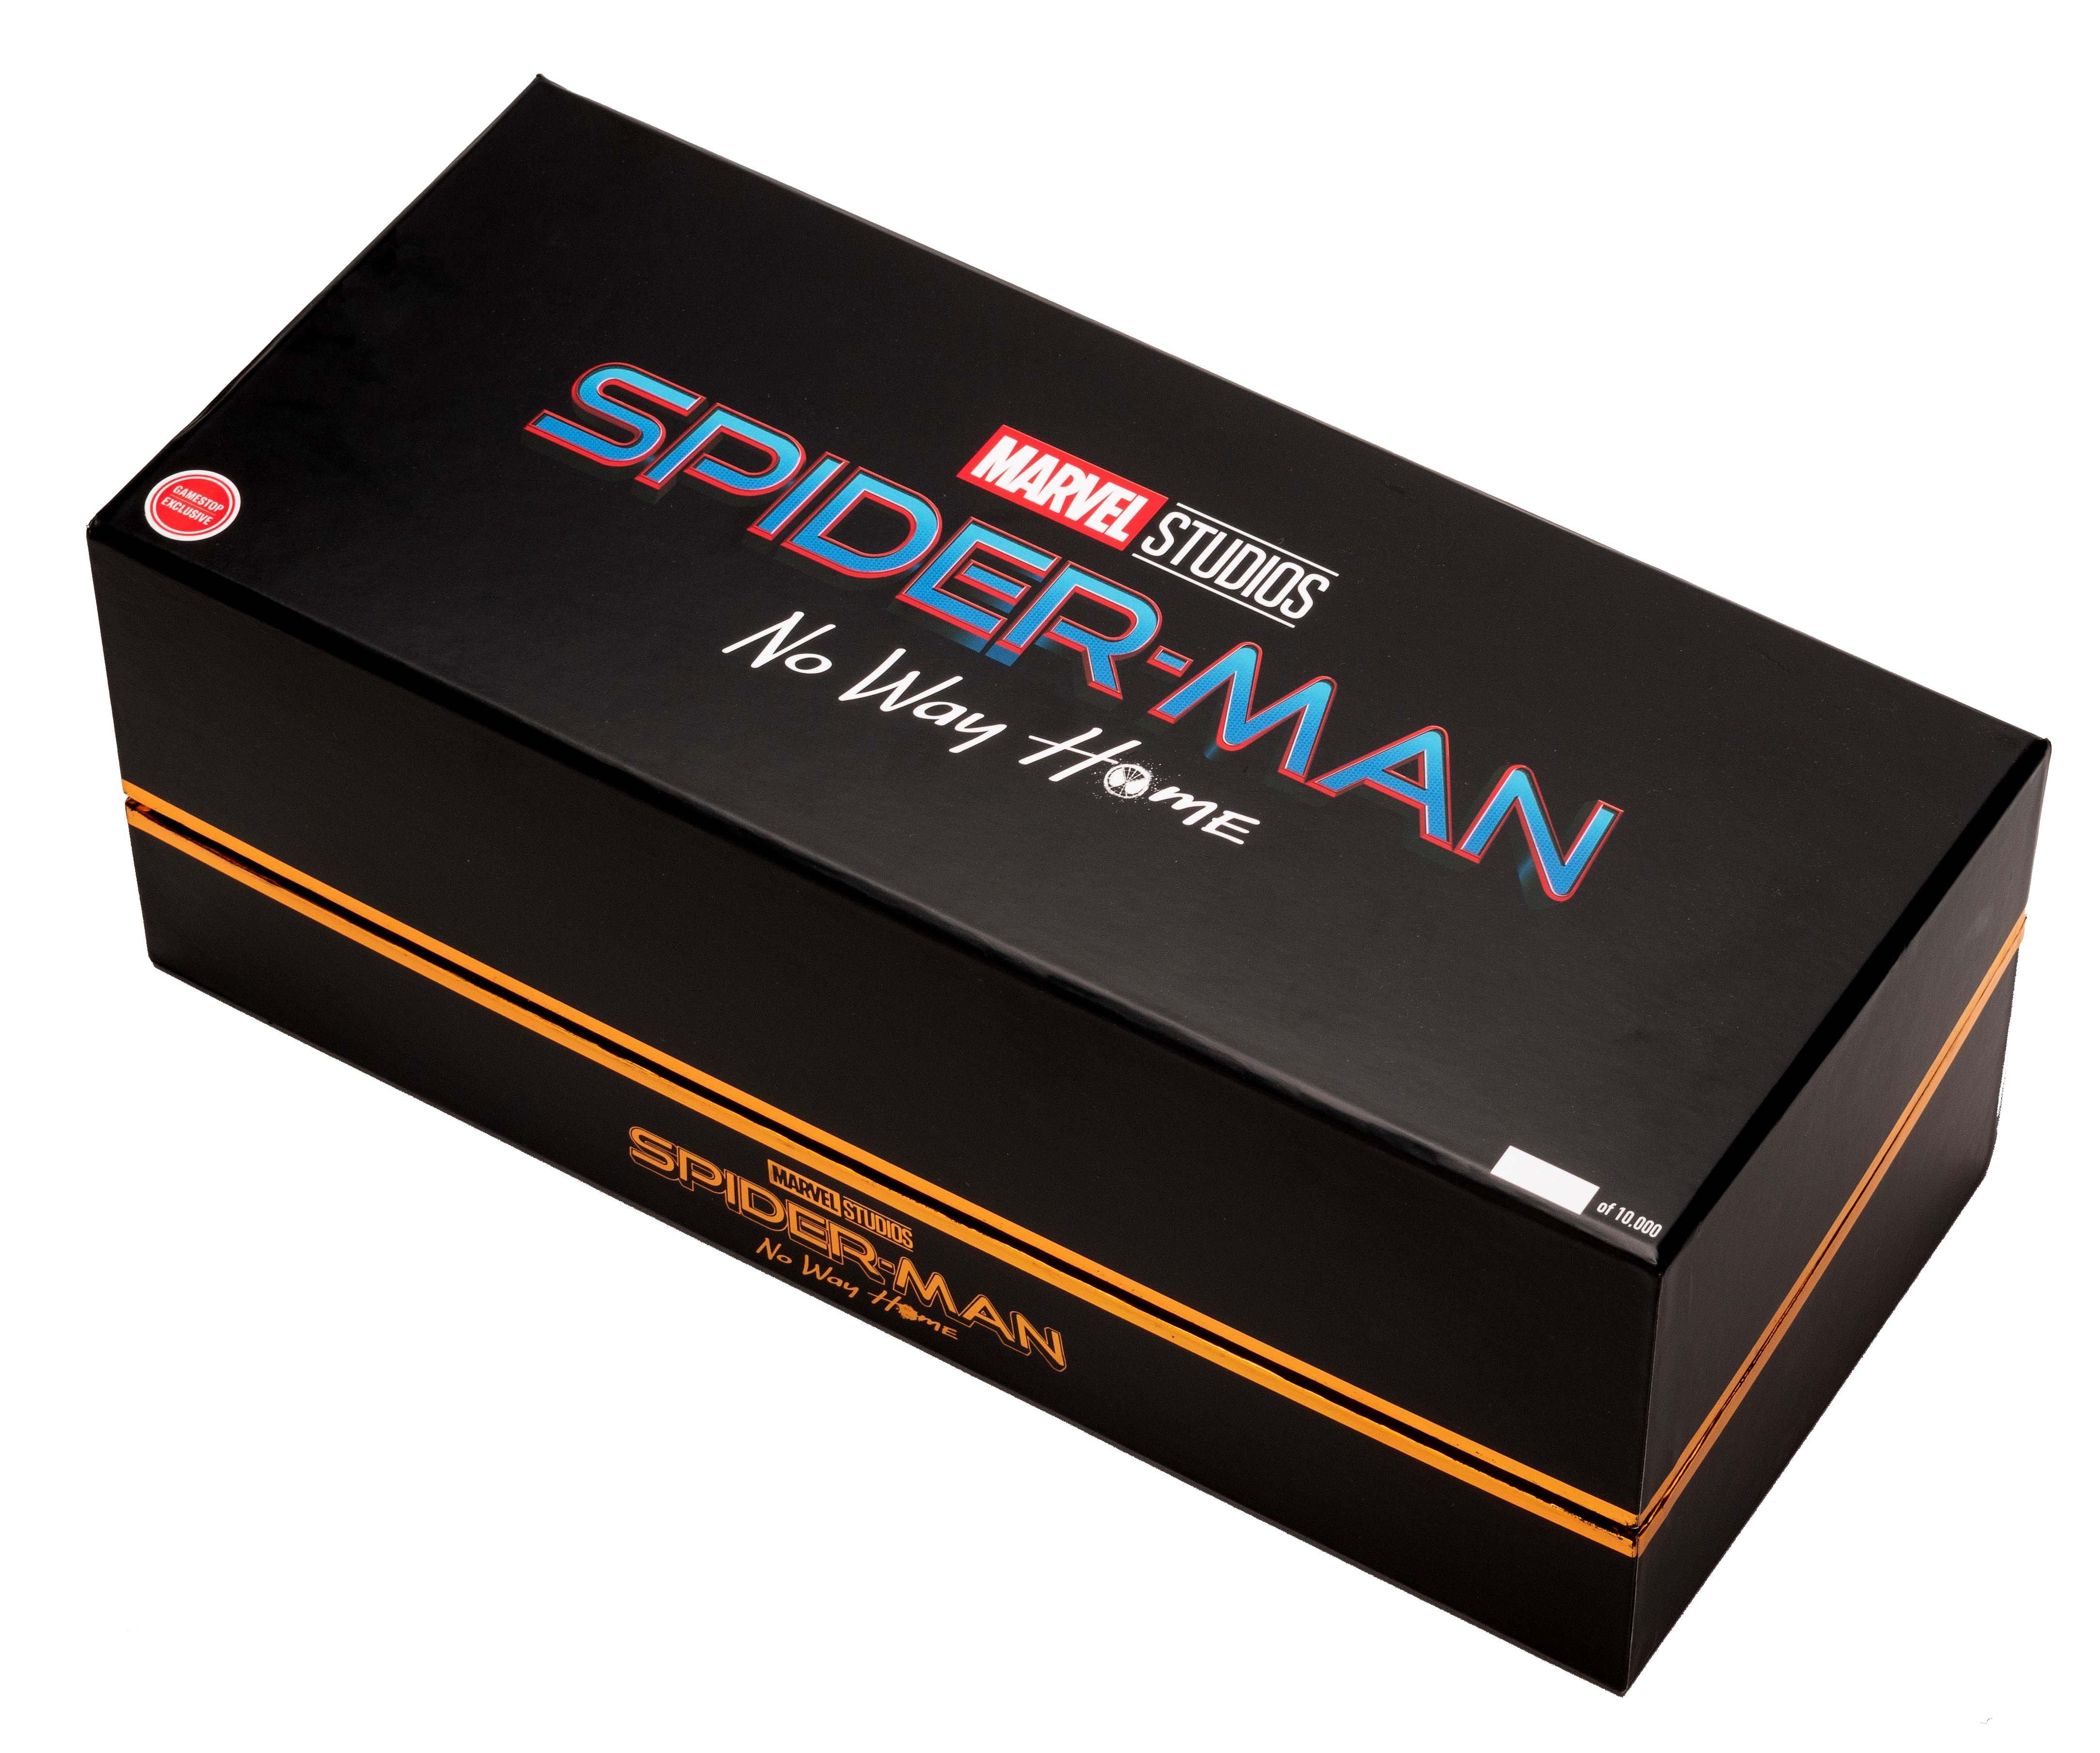 list item 3 of 11 Marvel Studios Spider-Man No Way Home Arm Band Bracelet with Decorative Box GameStop Exclusive